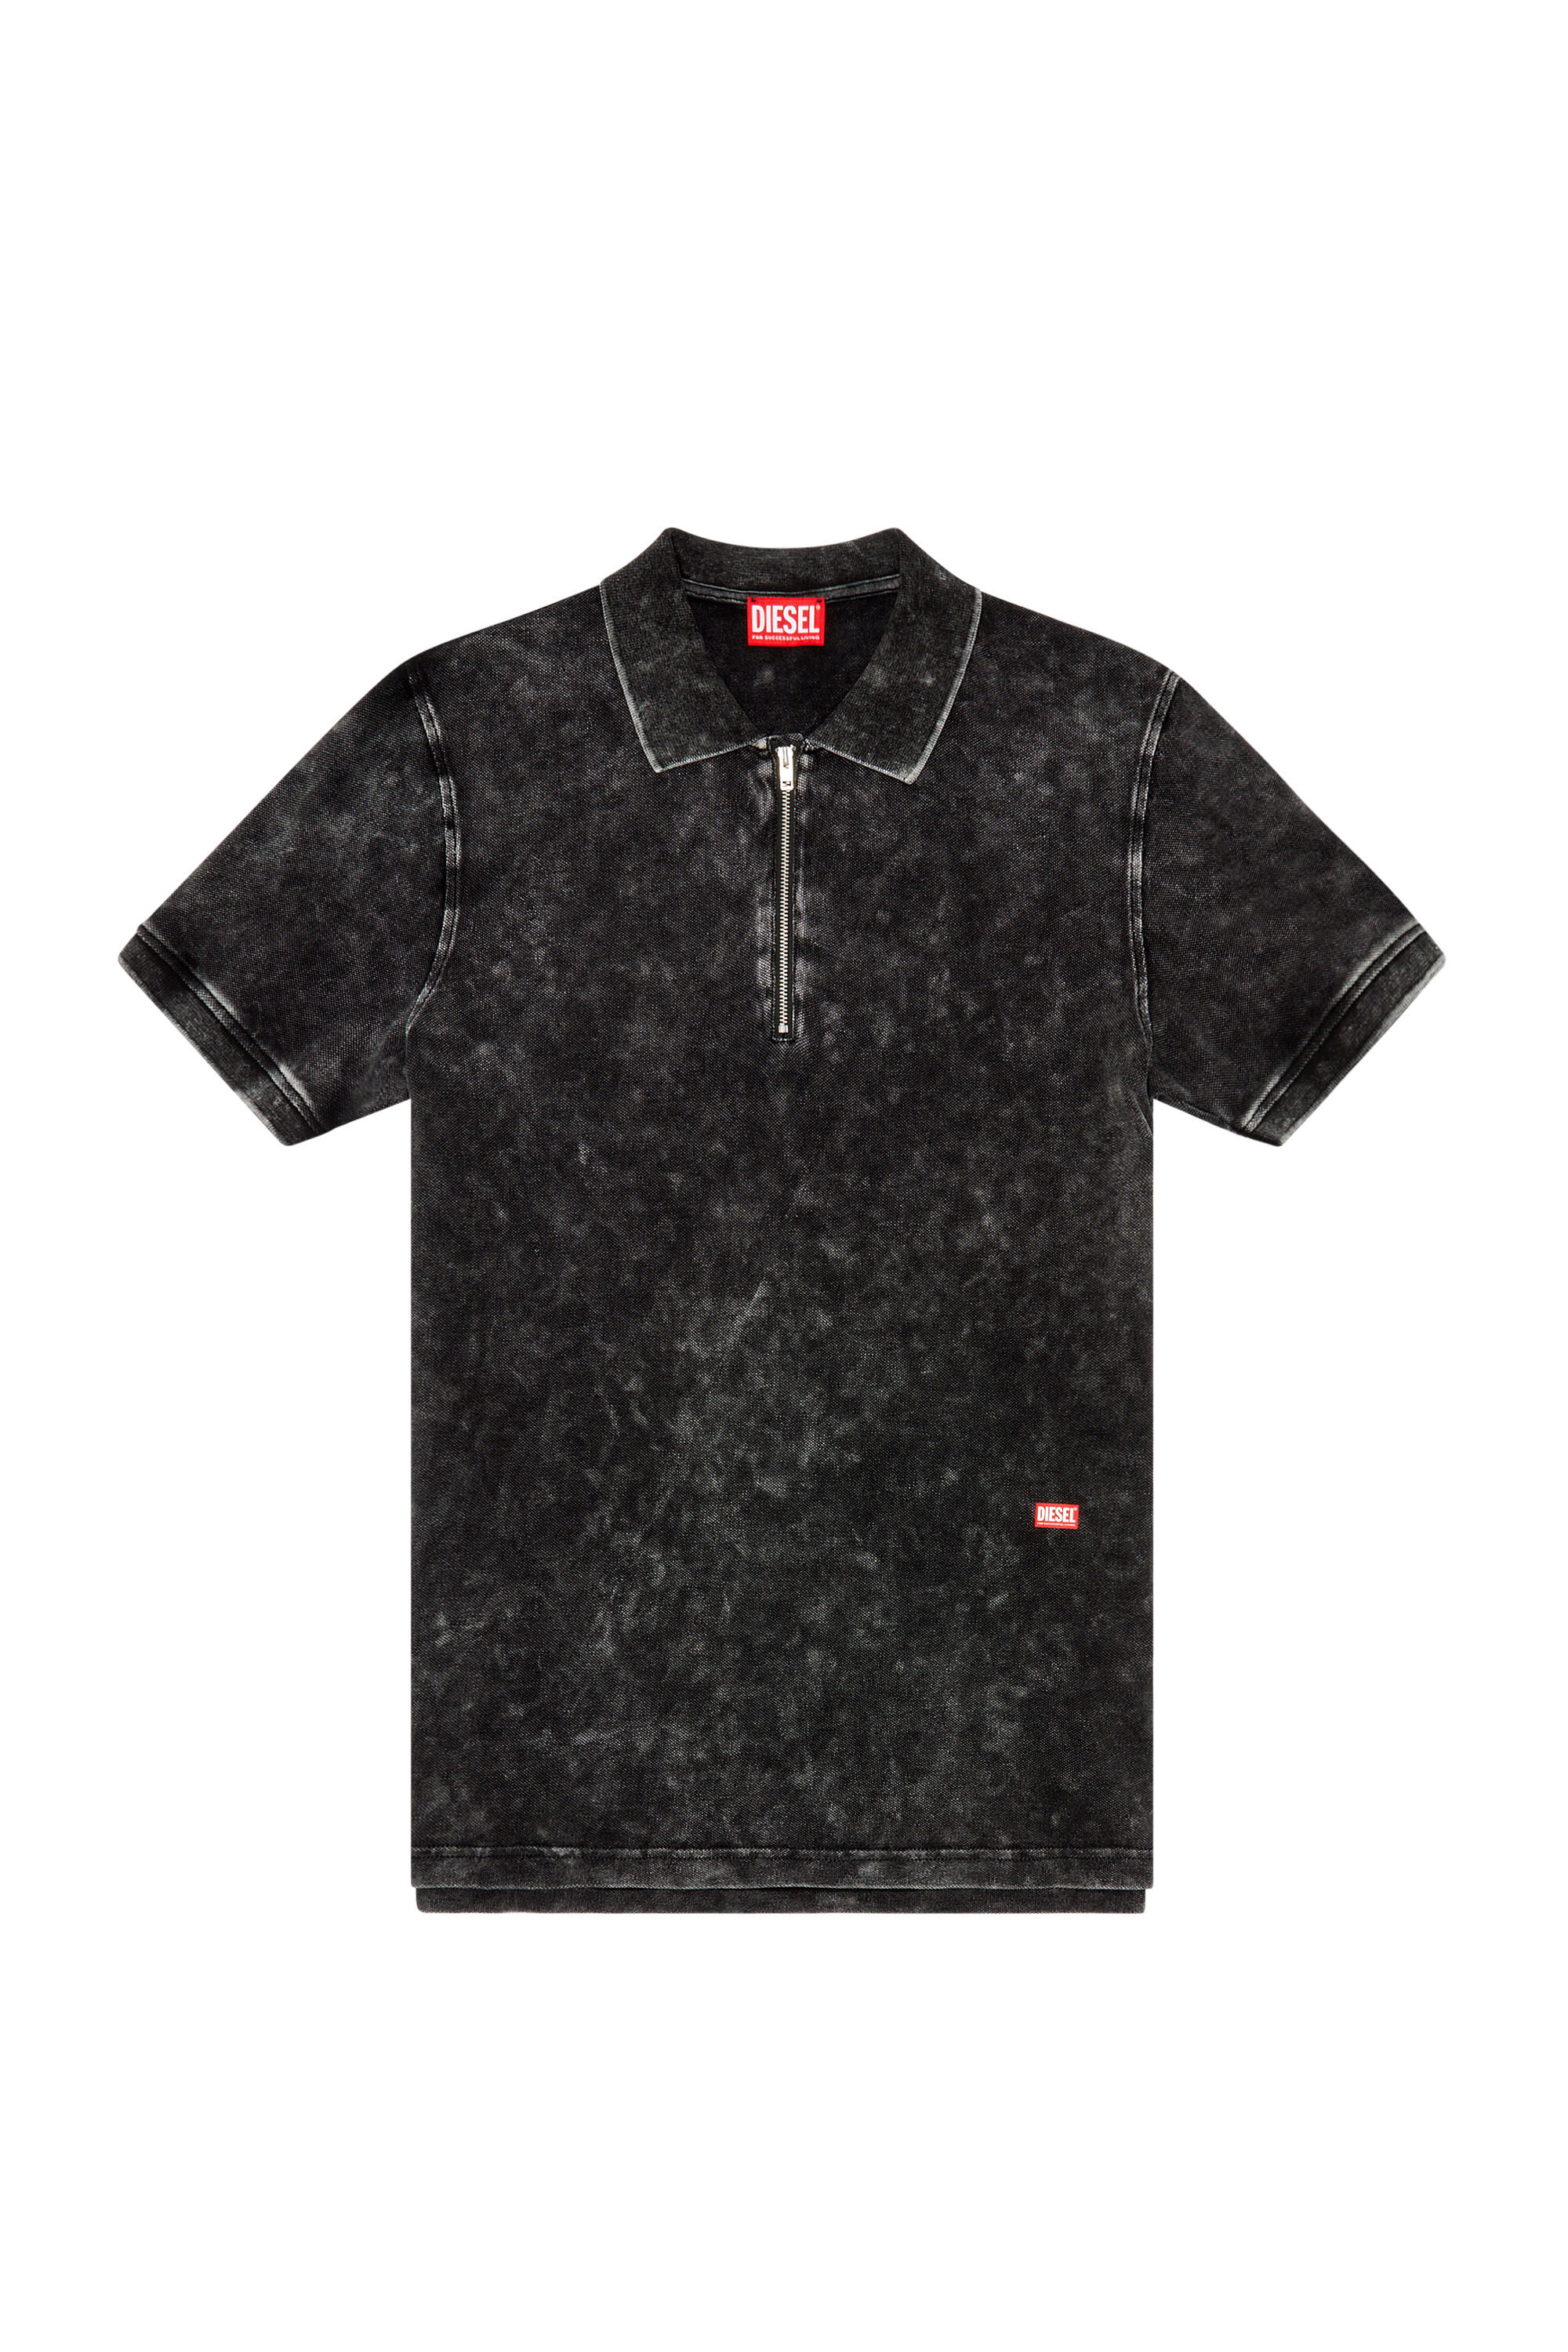 Men's Polo shirt in faded piqué | Black | Diesel